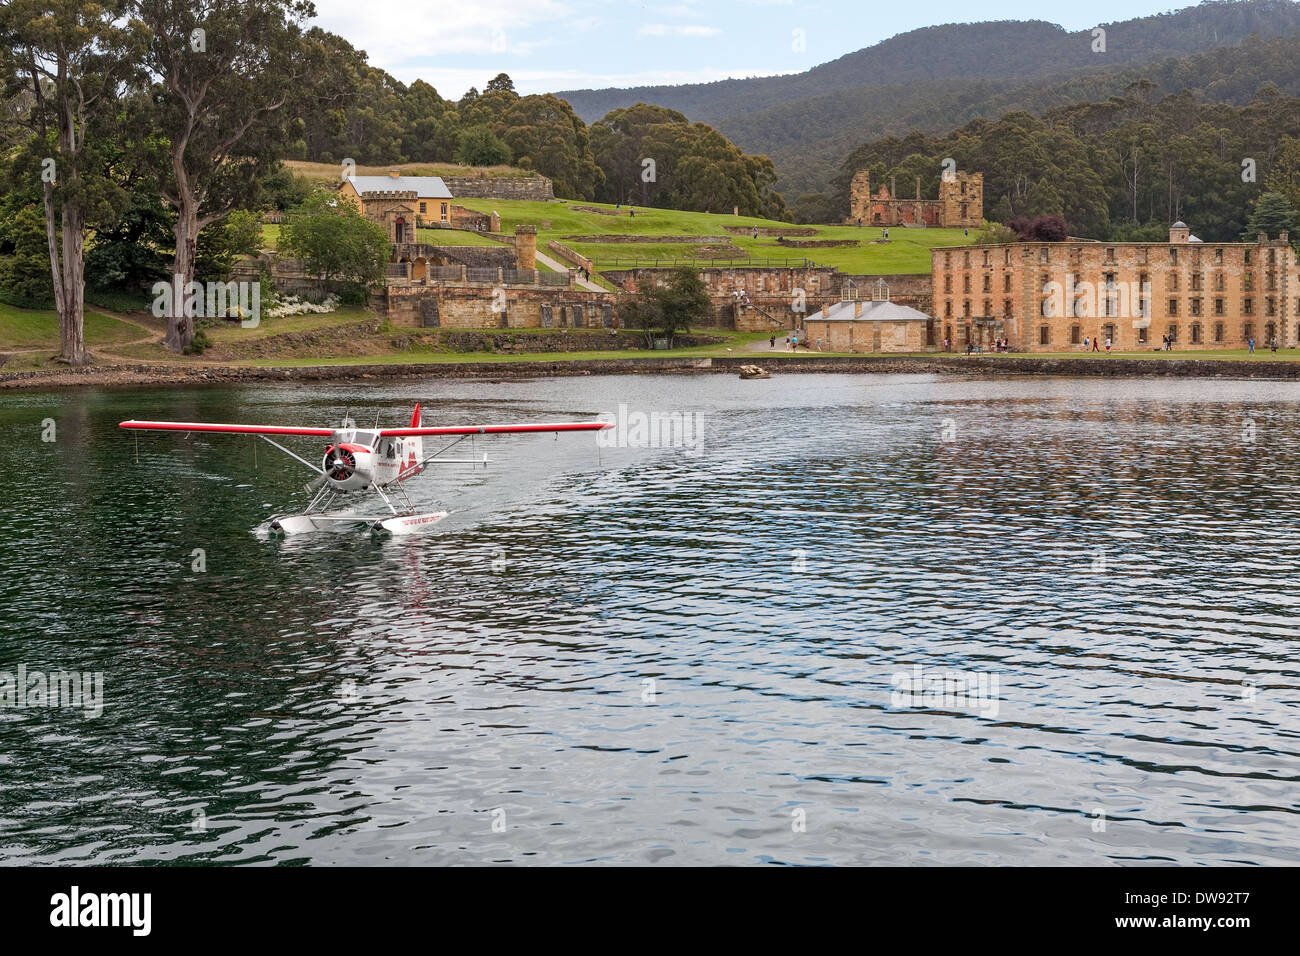 Seaplane and The Penitentiary, old flour mill, Port Arthur, Tasmania, Australia Stock Photo